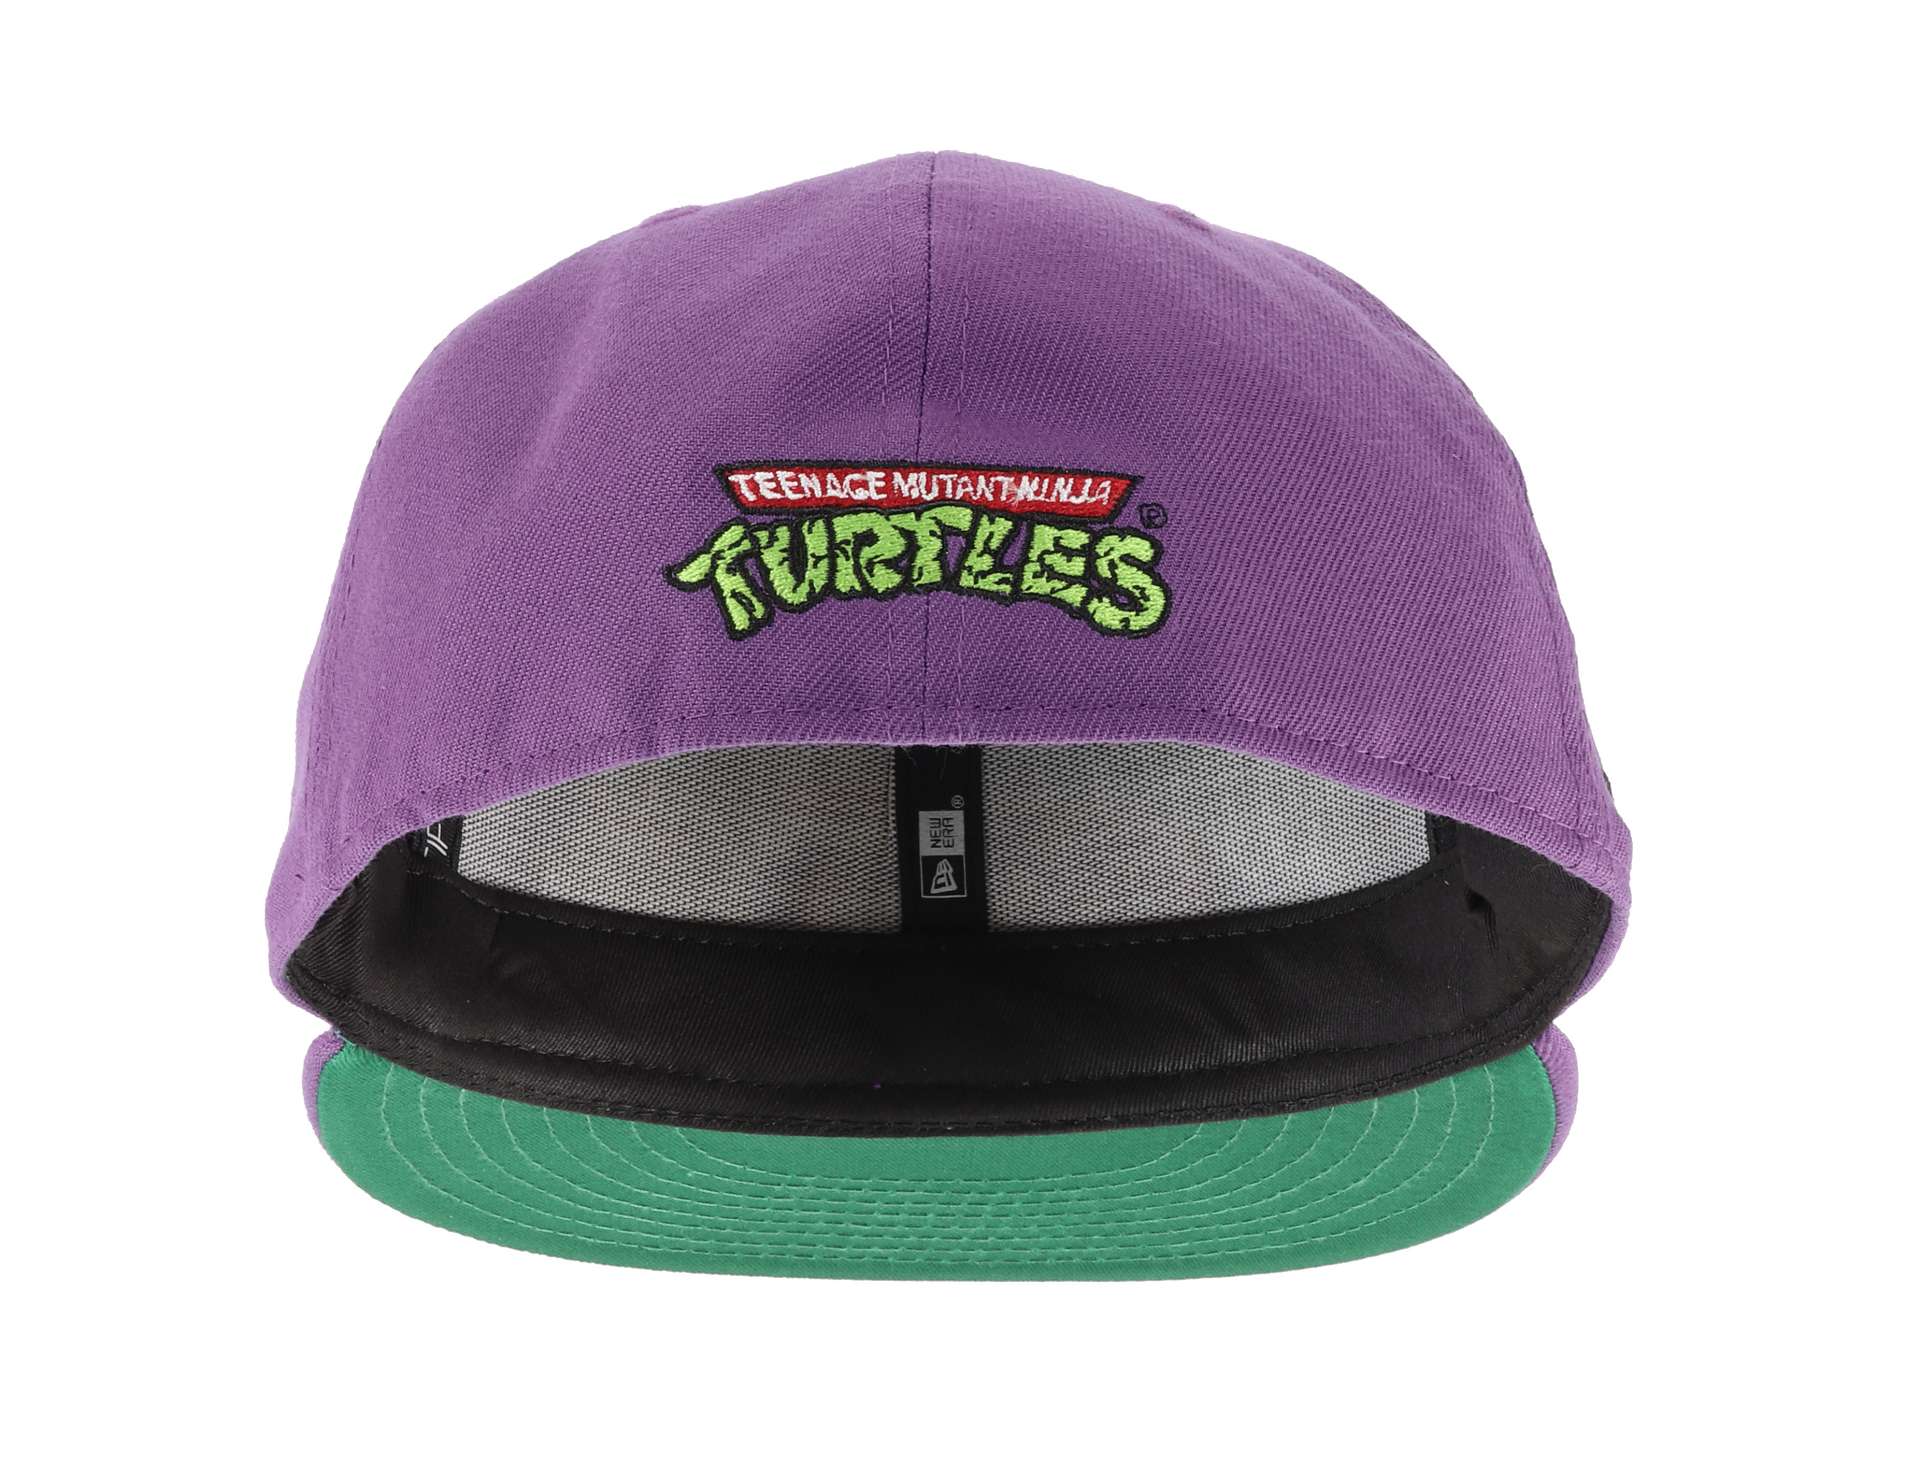 Cowabunga Pizza Ninja Turtles Island Purple TMNT Edition 59Fifty Cap New Era